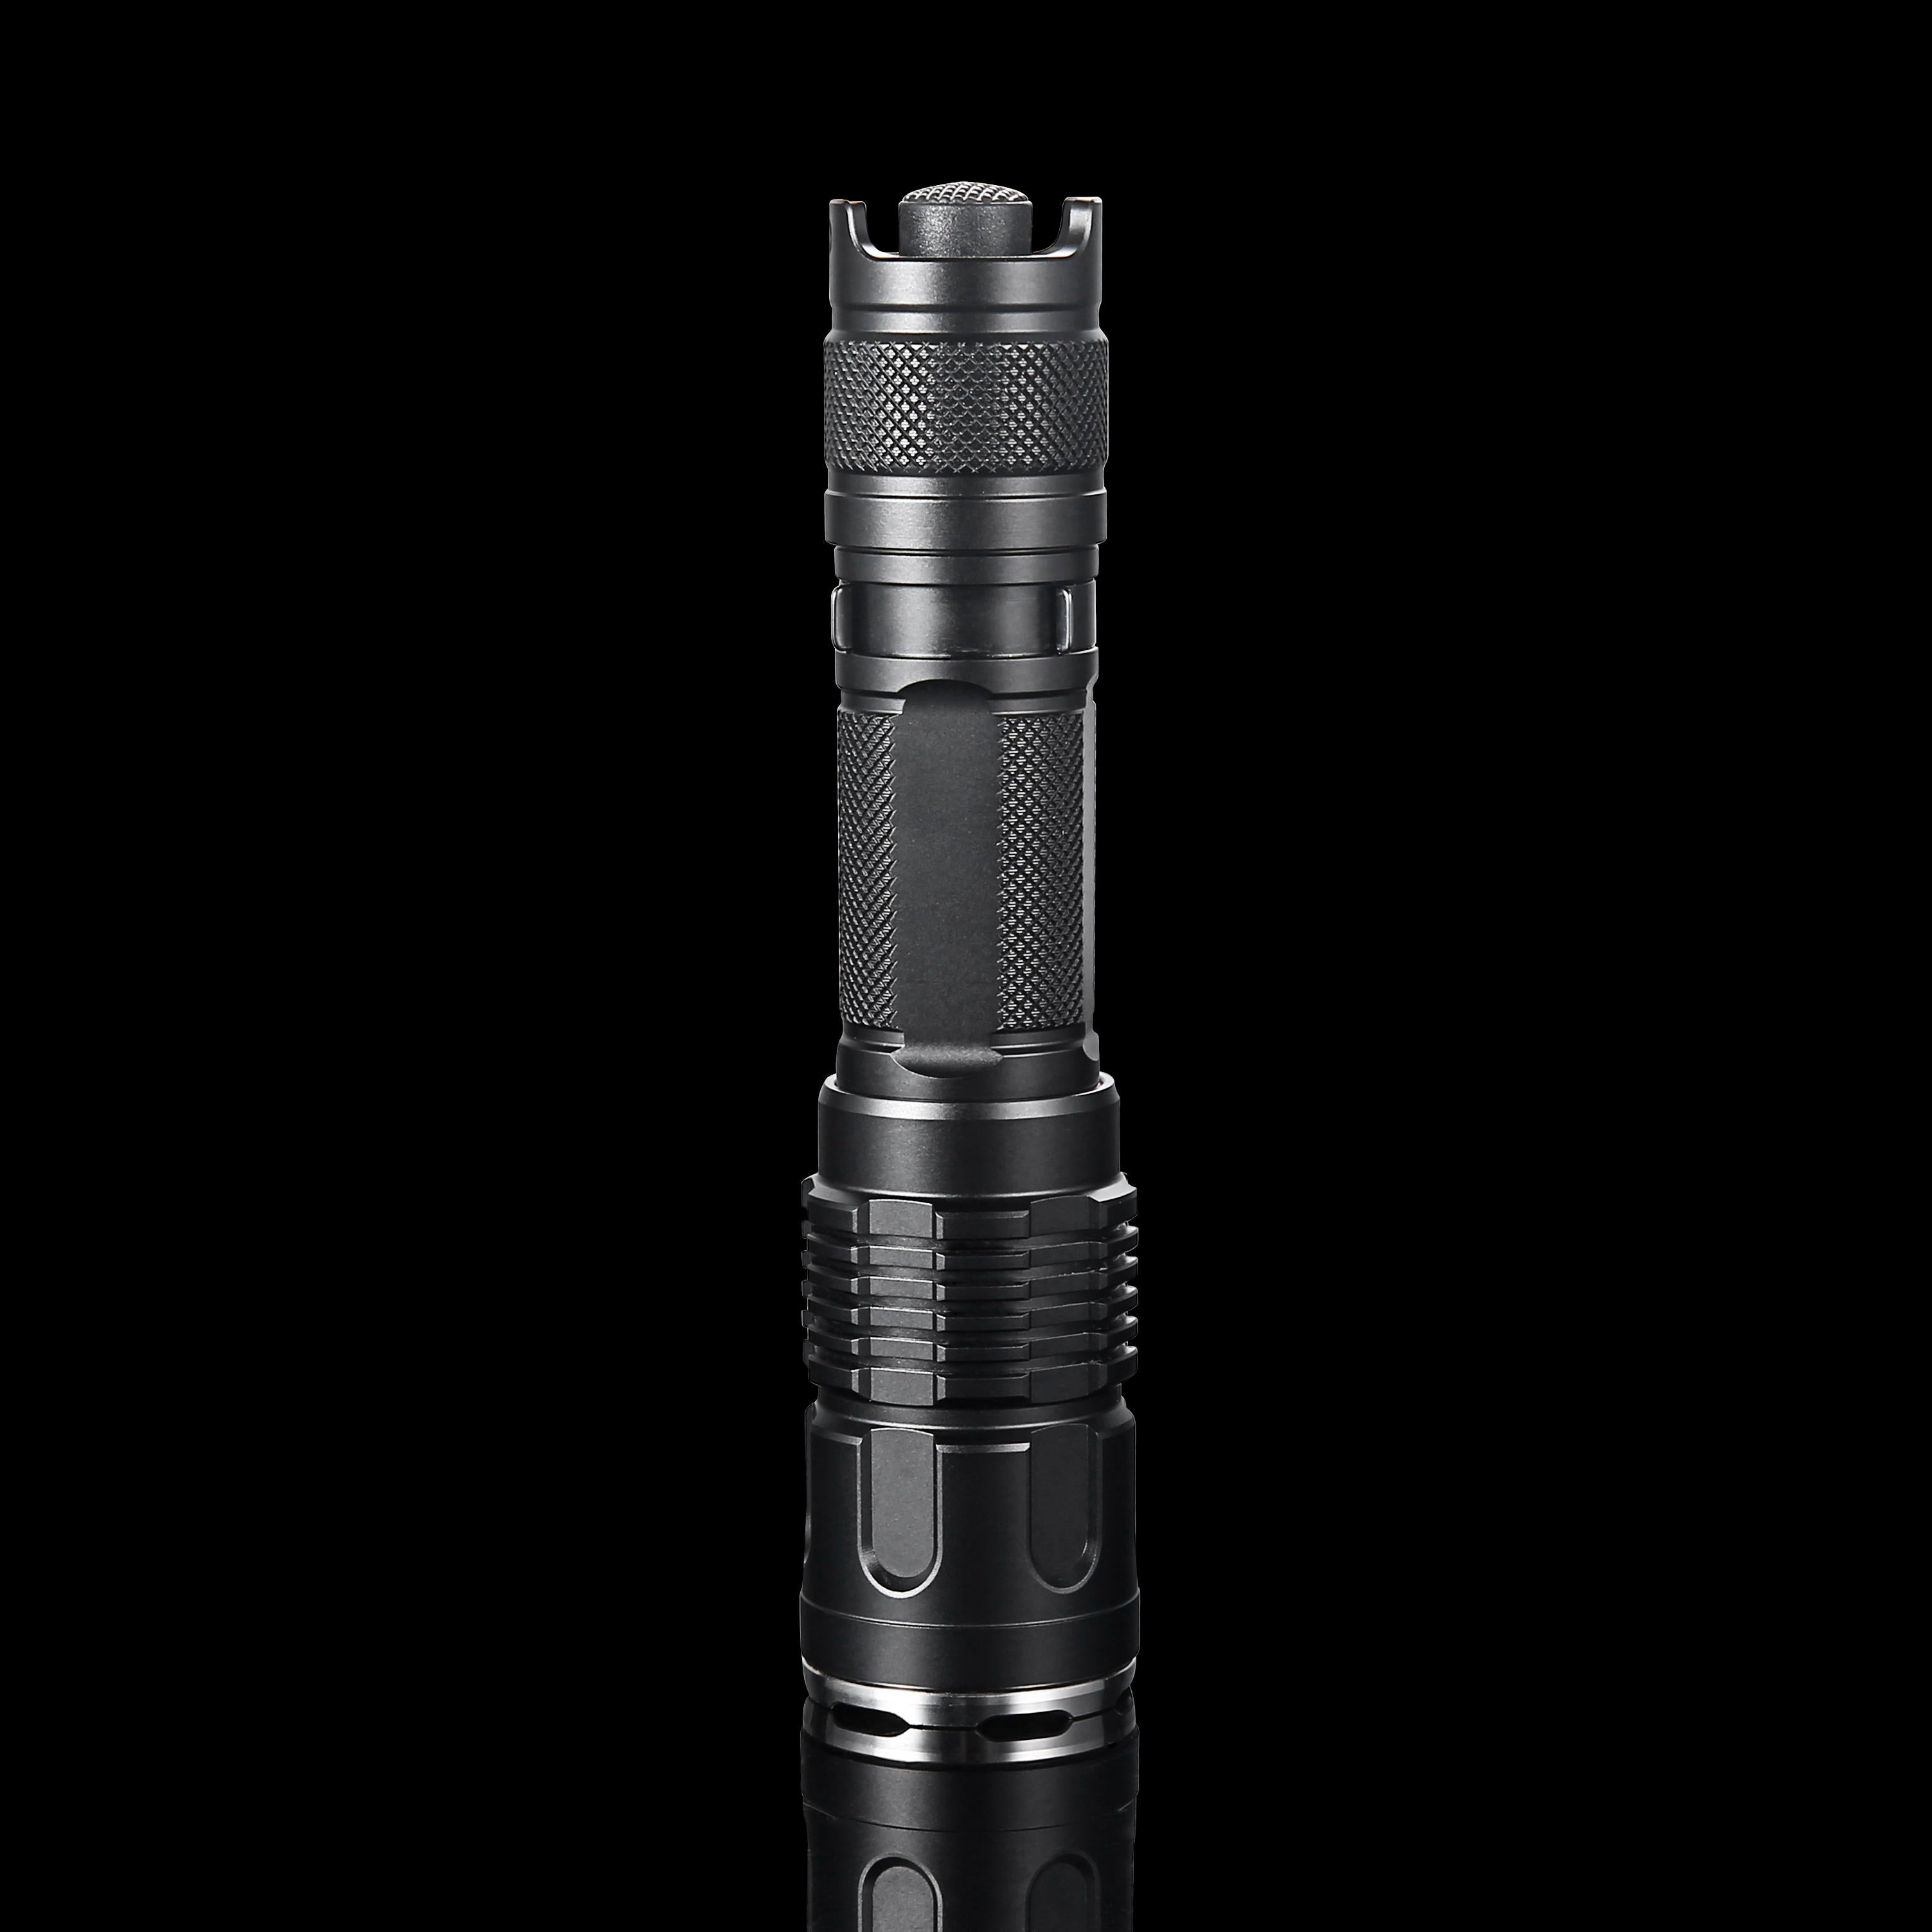 JETBEAM M2S WP-RX 480Lumens 1800m Tactical White Laser Flashlight